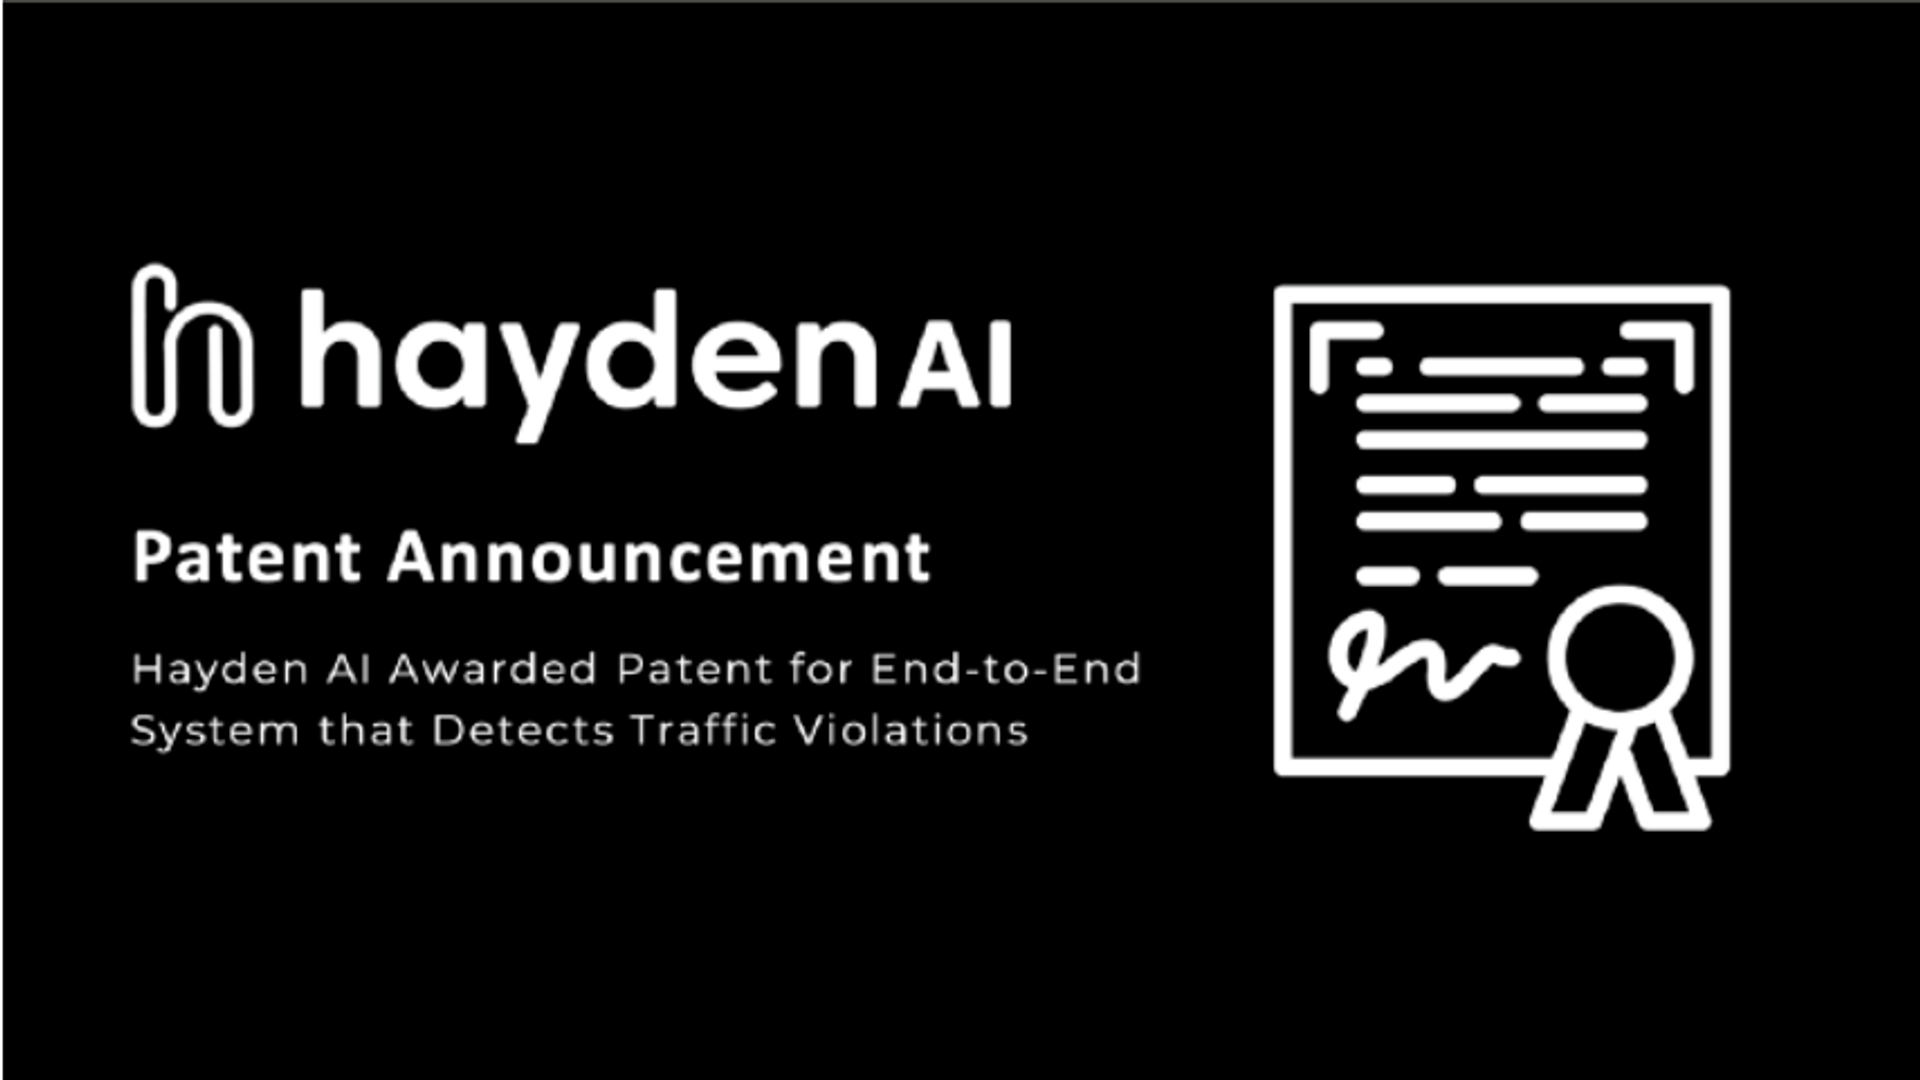 Patent Announcement